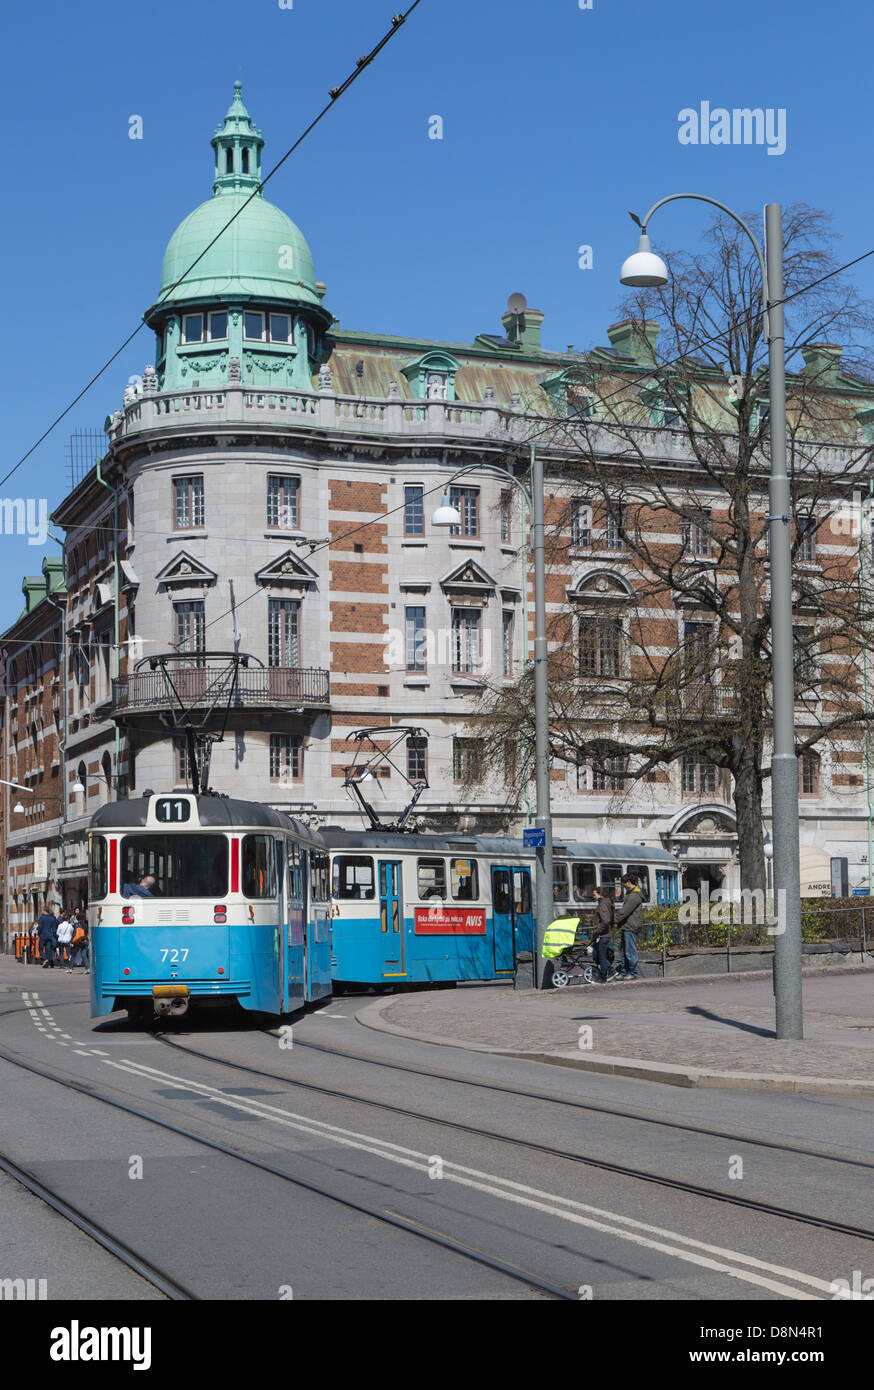 Electric tram or train in Gothenburg, Sweden Stock Photo